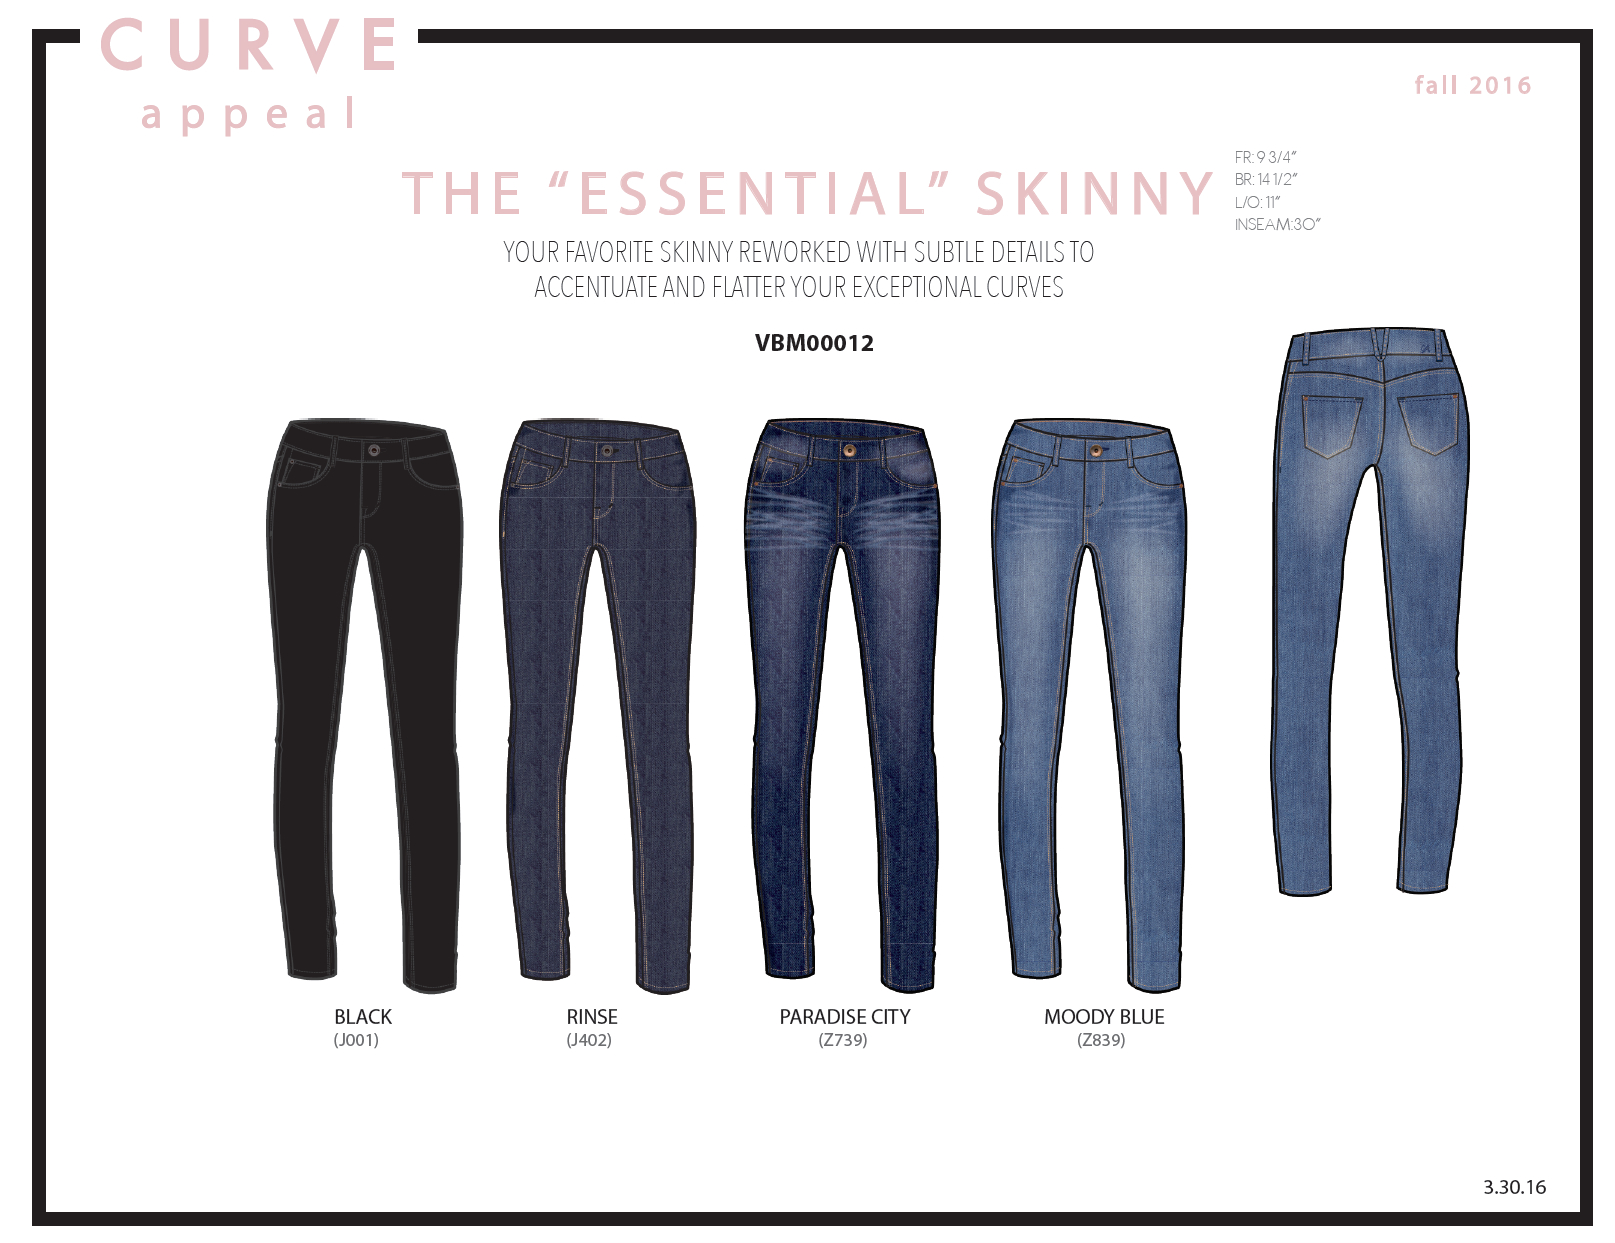 essential skinny curve appeal